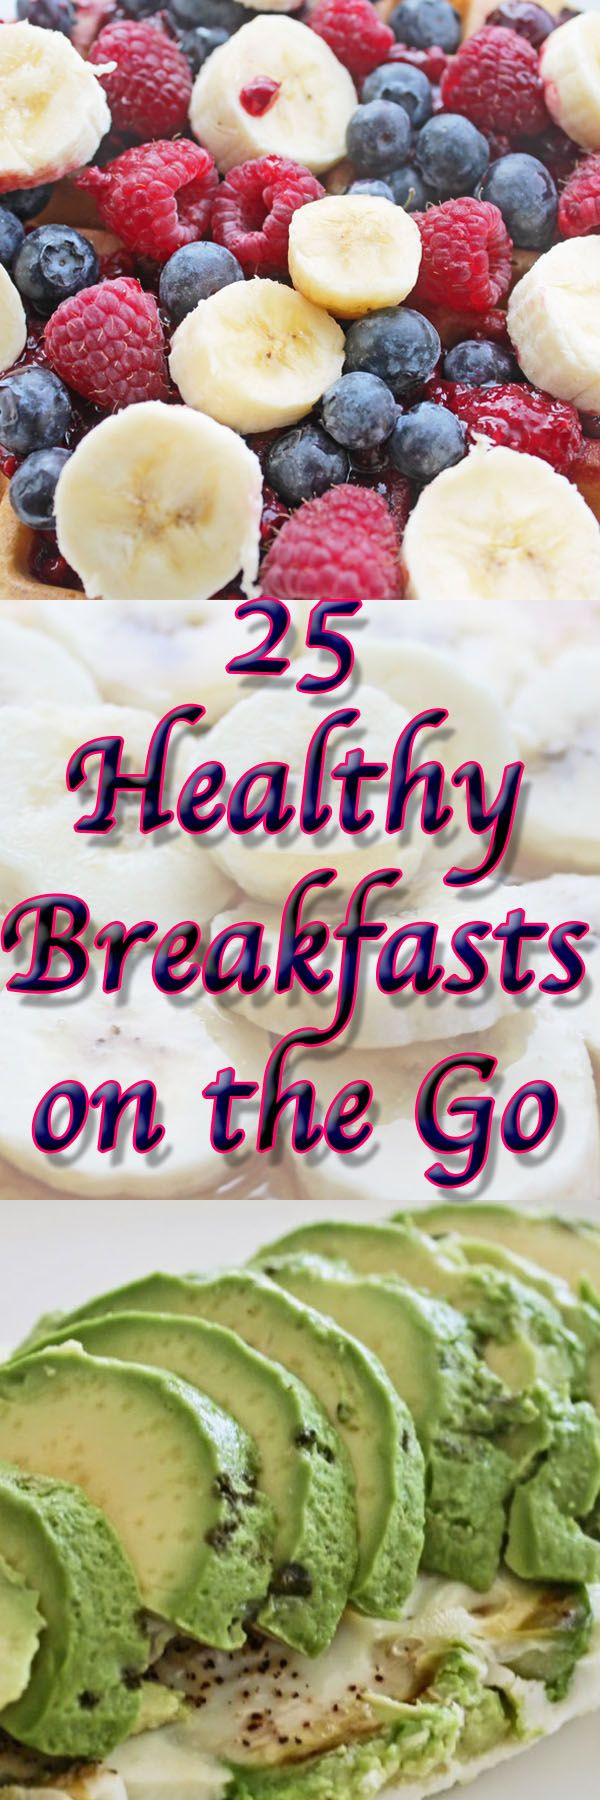 Healthy Breakfast Ideas On The Go
 25 healthy breakfasts on the go